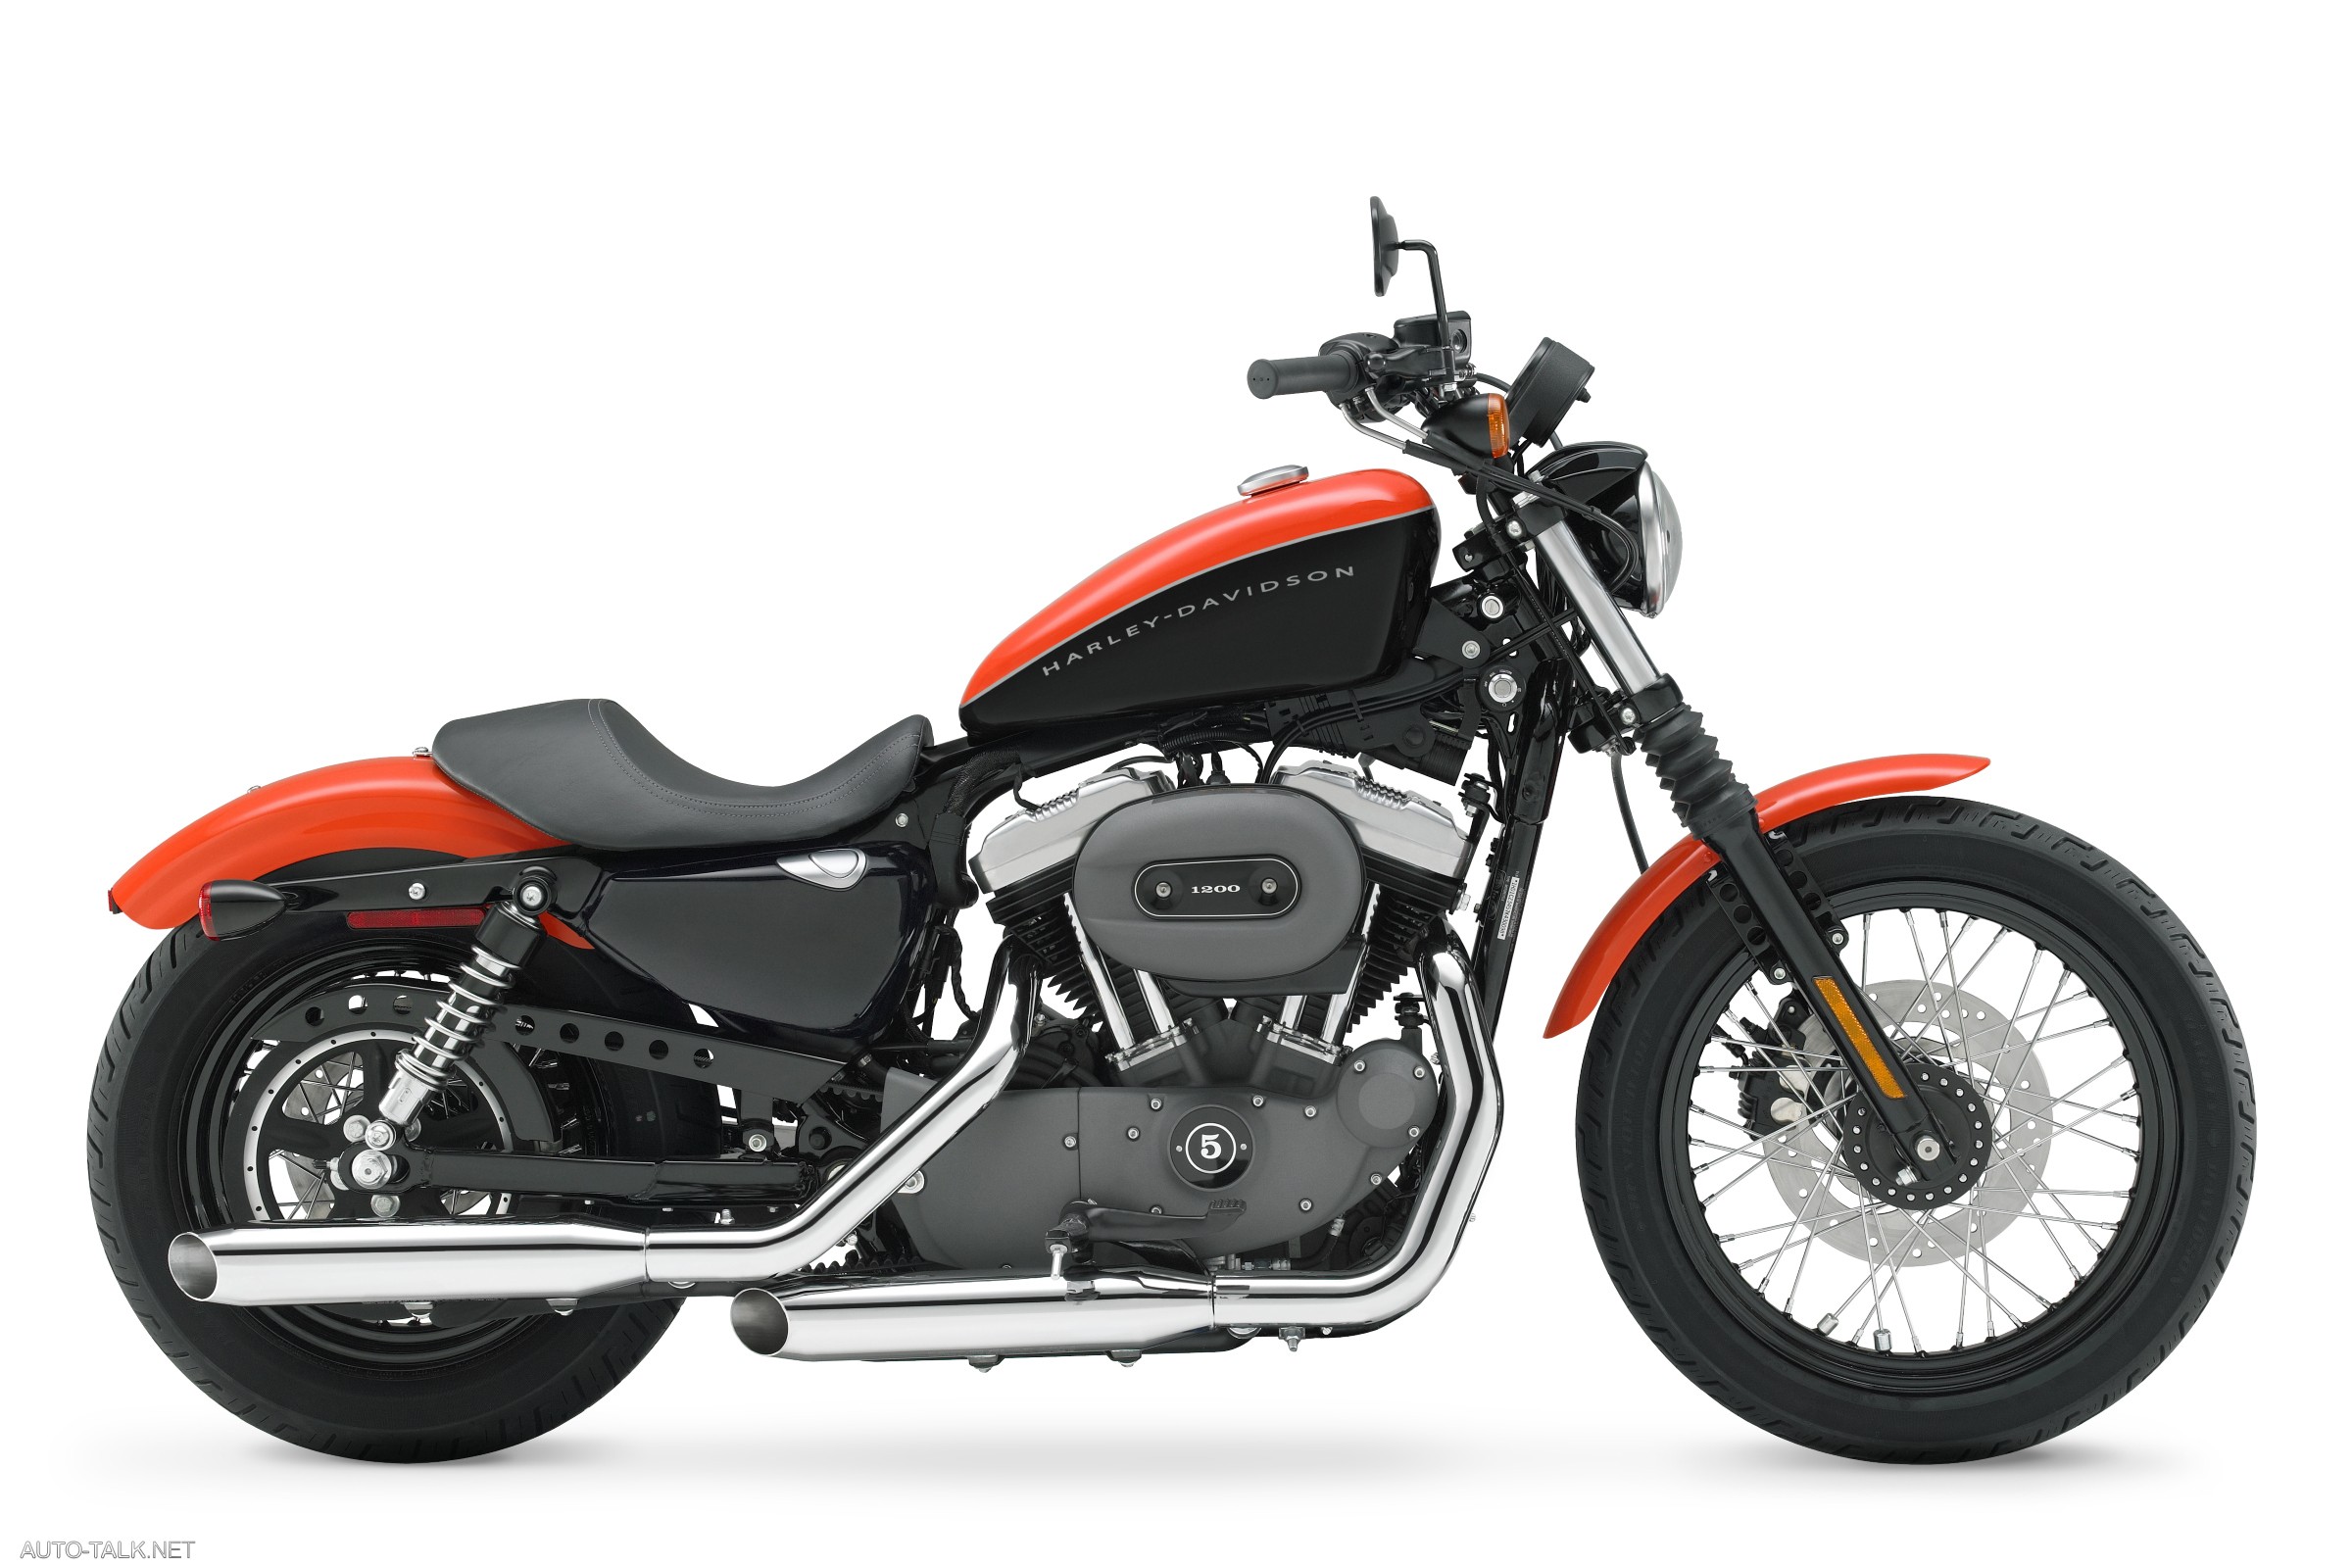 2008 Harley-Davidson Sportster